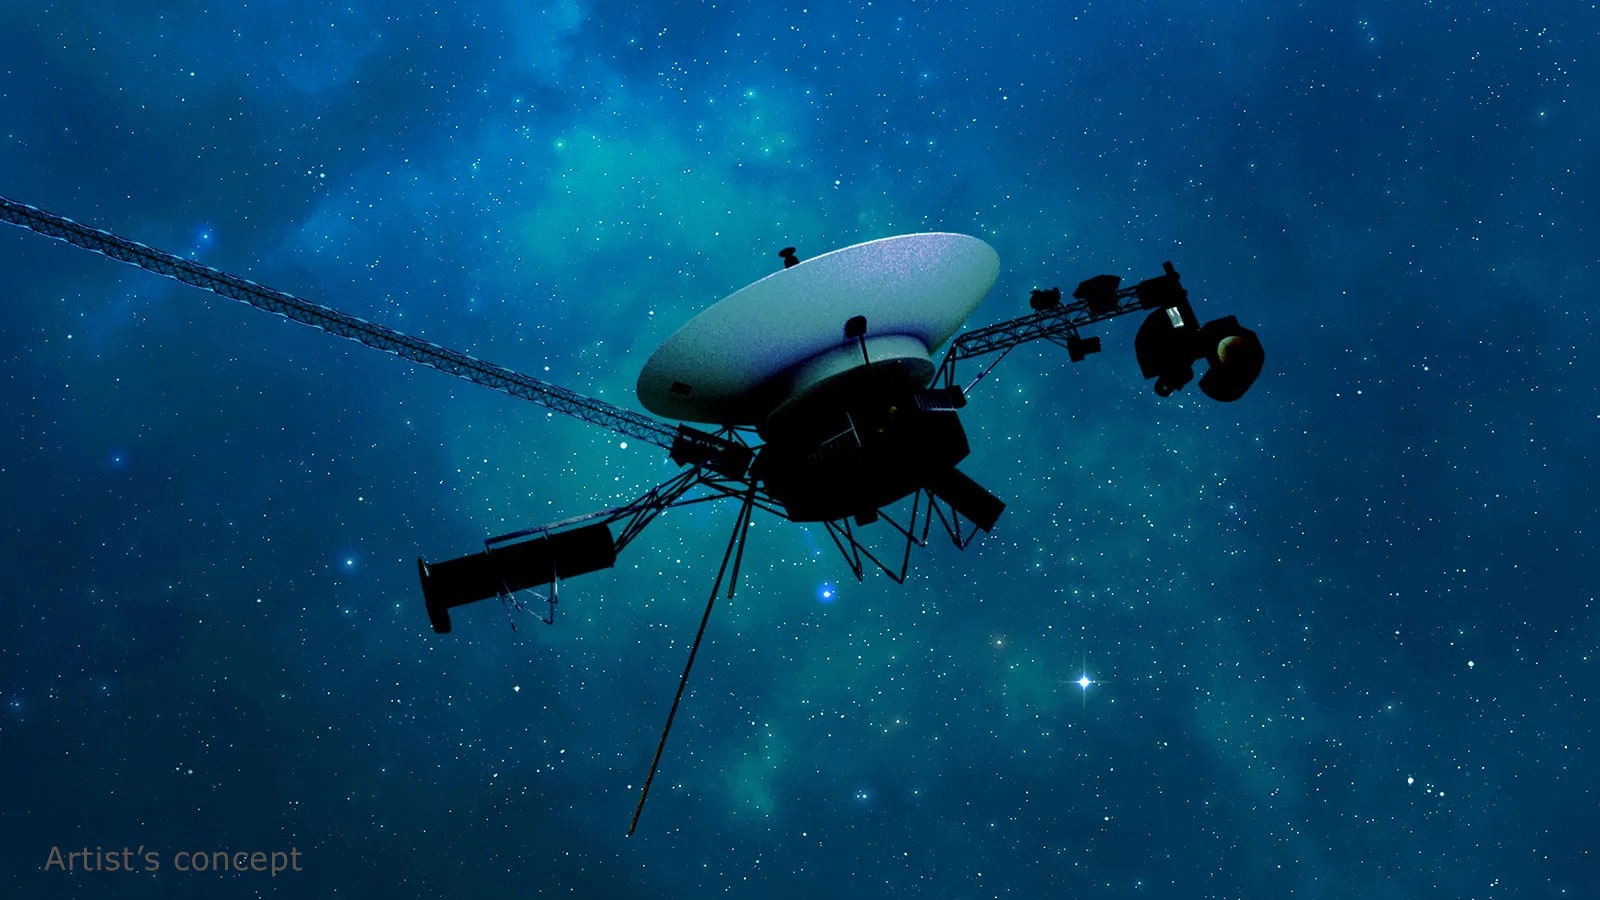 Interstellar Repair: NASA is optimistic about Voyager 1